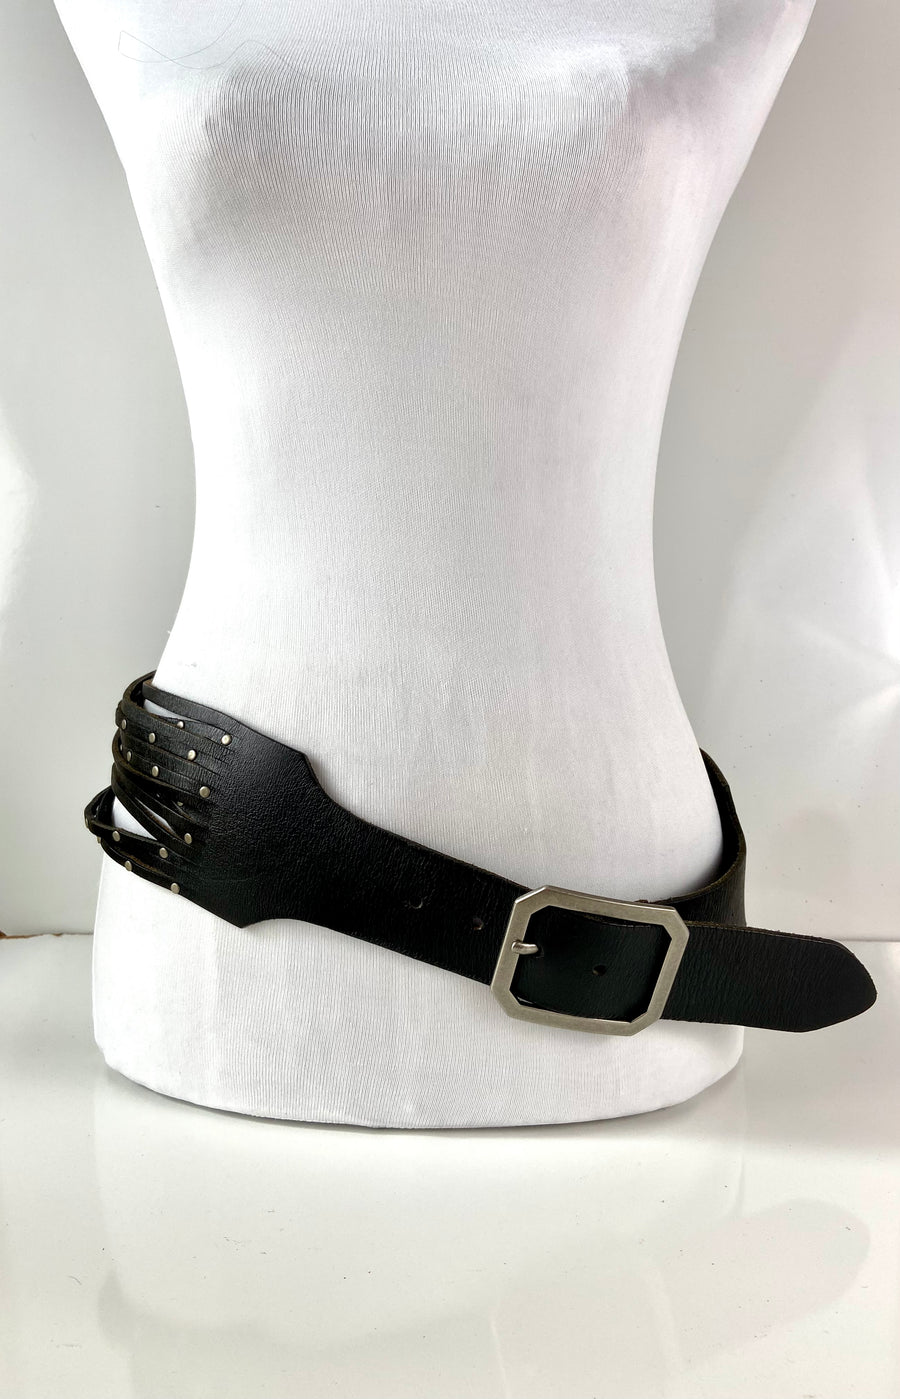 Linea pelle black leather belt